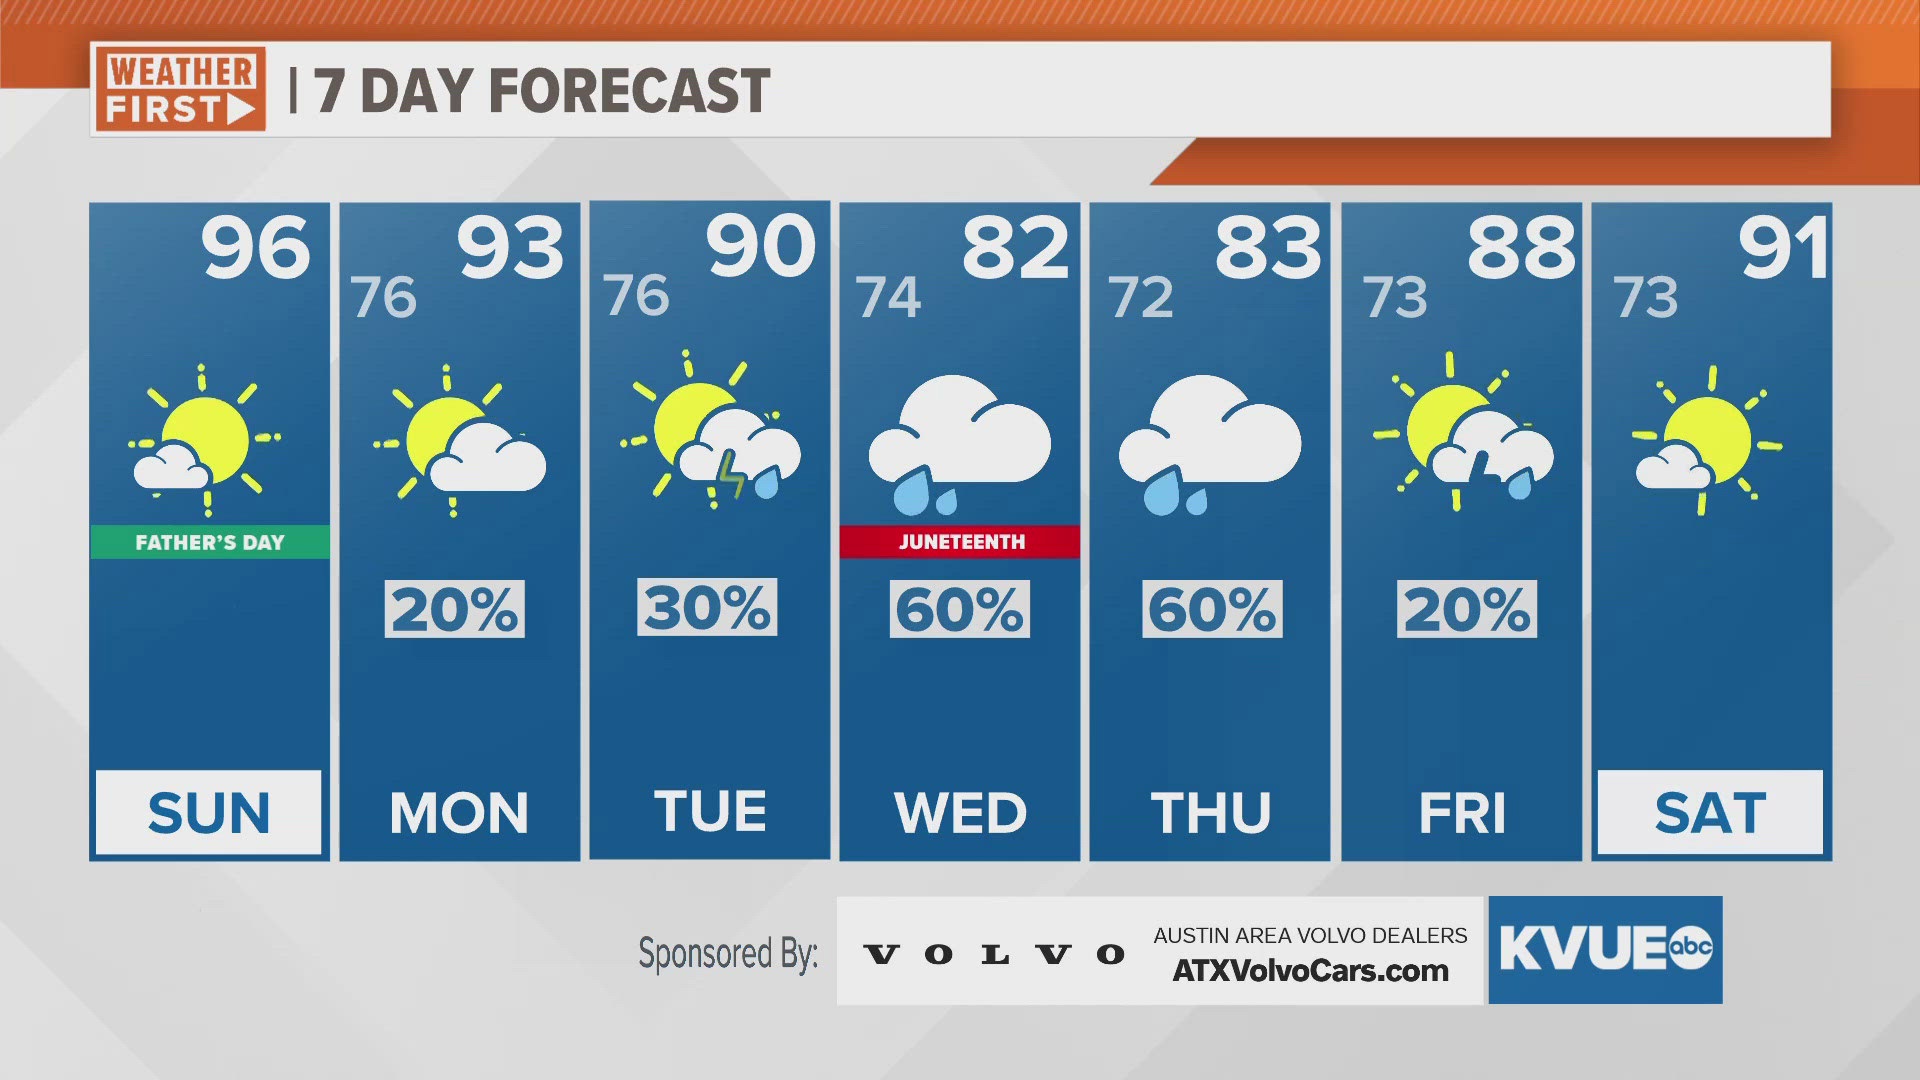 Hot and humid early week, increasing rain chances mid-late week.